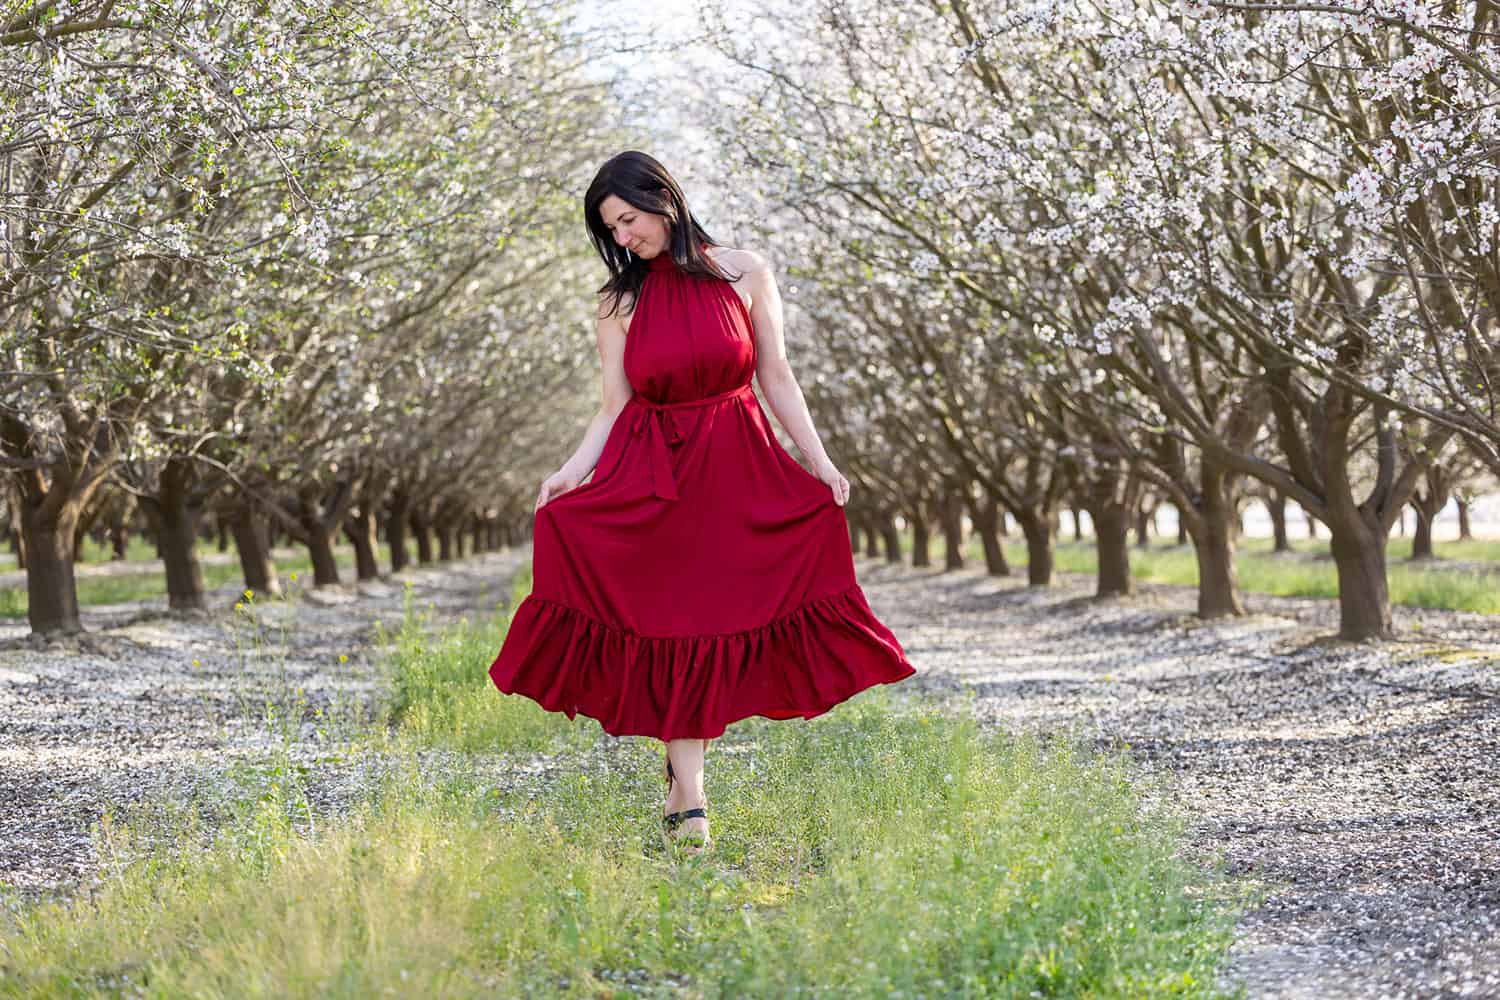 elizabeth victoria walking in an almond orchard wearing a red dress